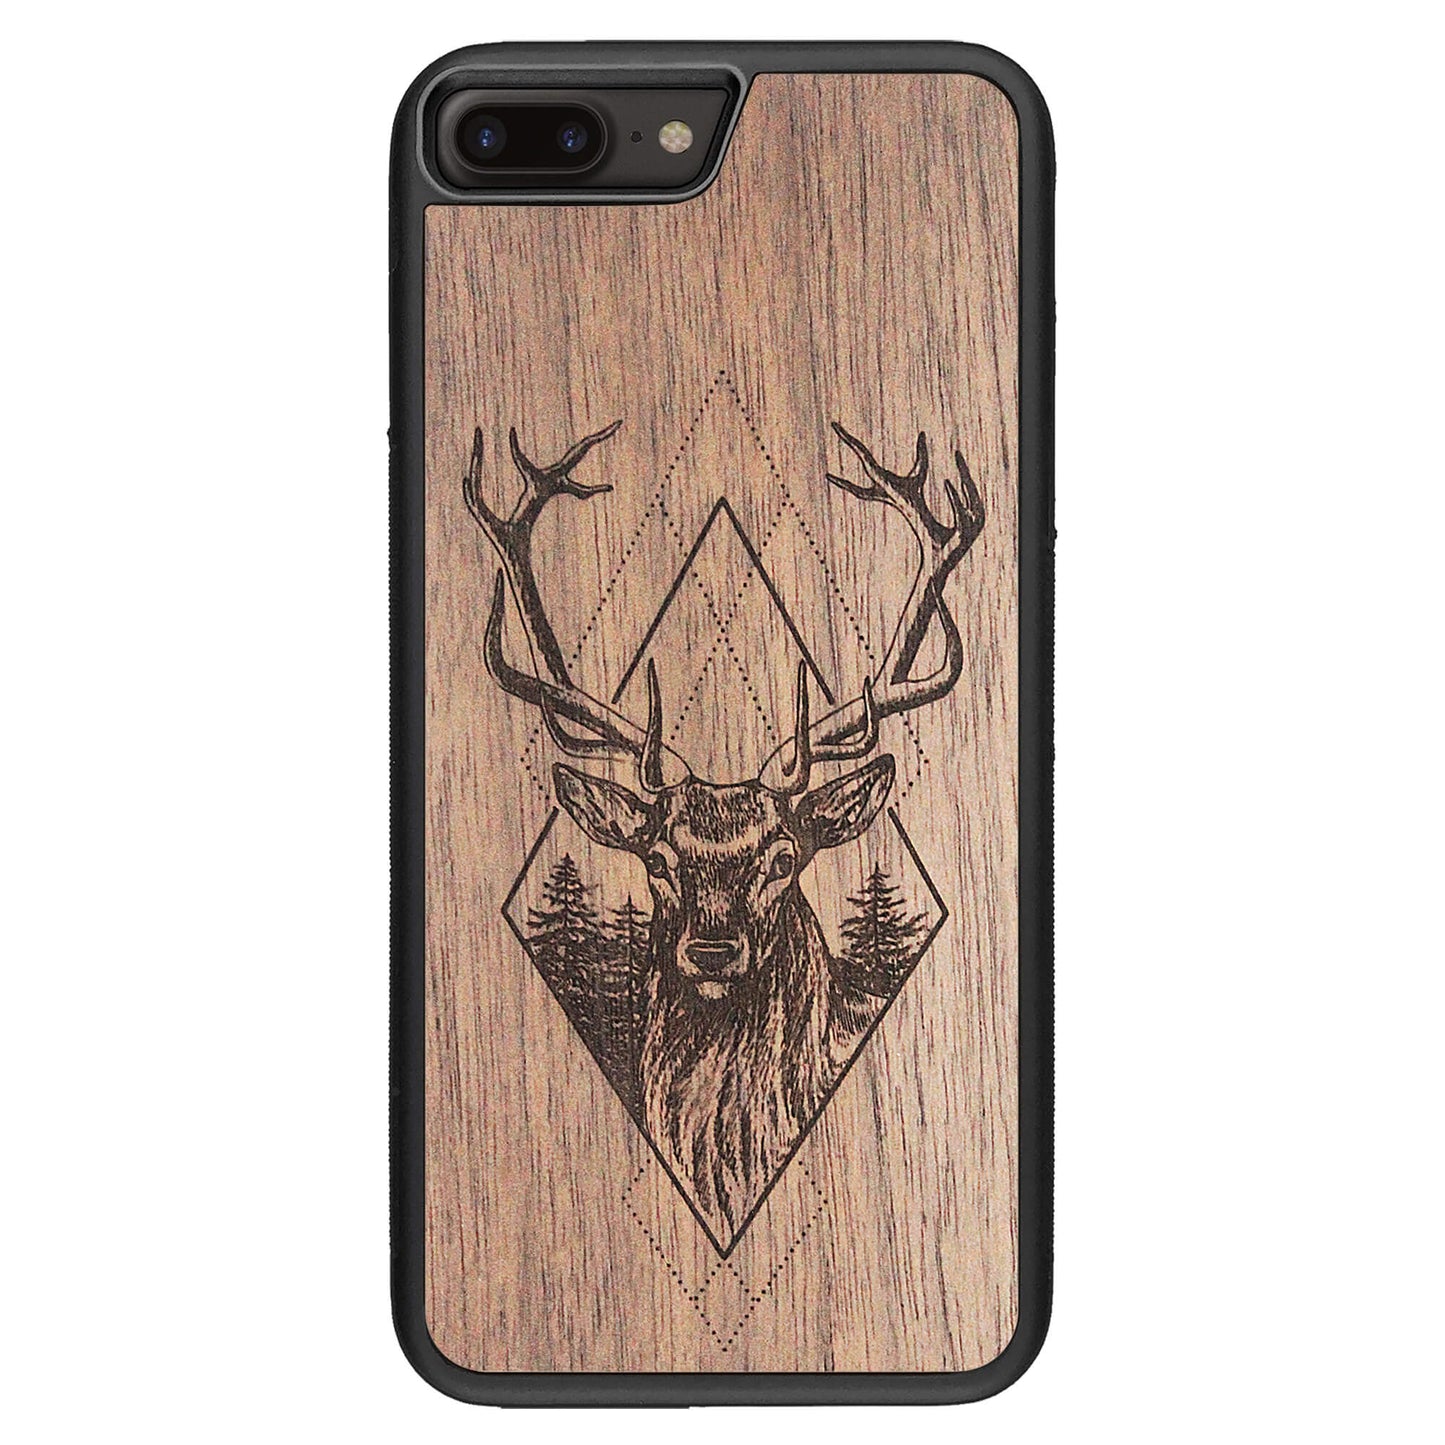 Wooden Case for iPhone 7 Plus Deer